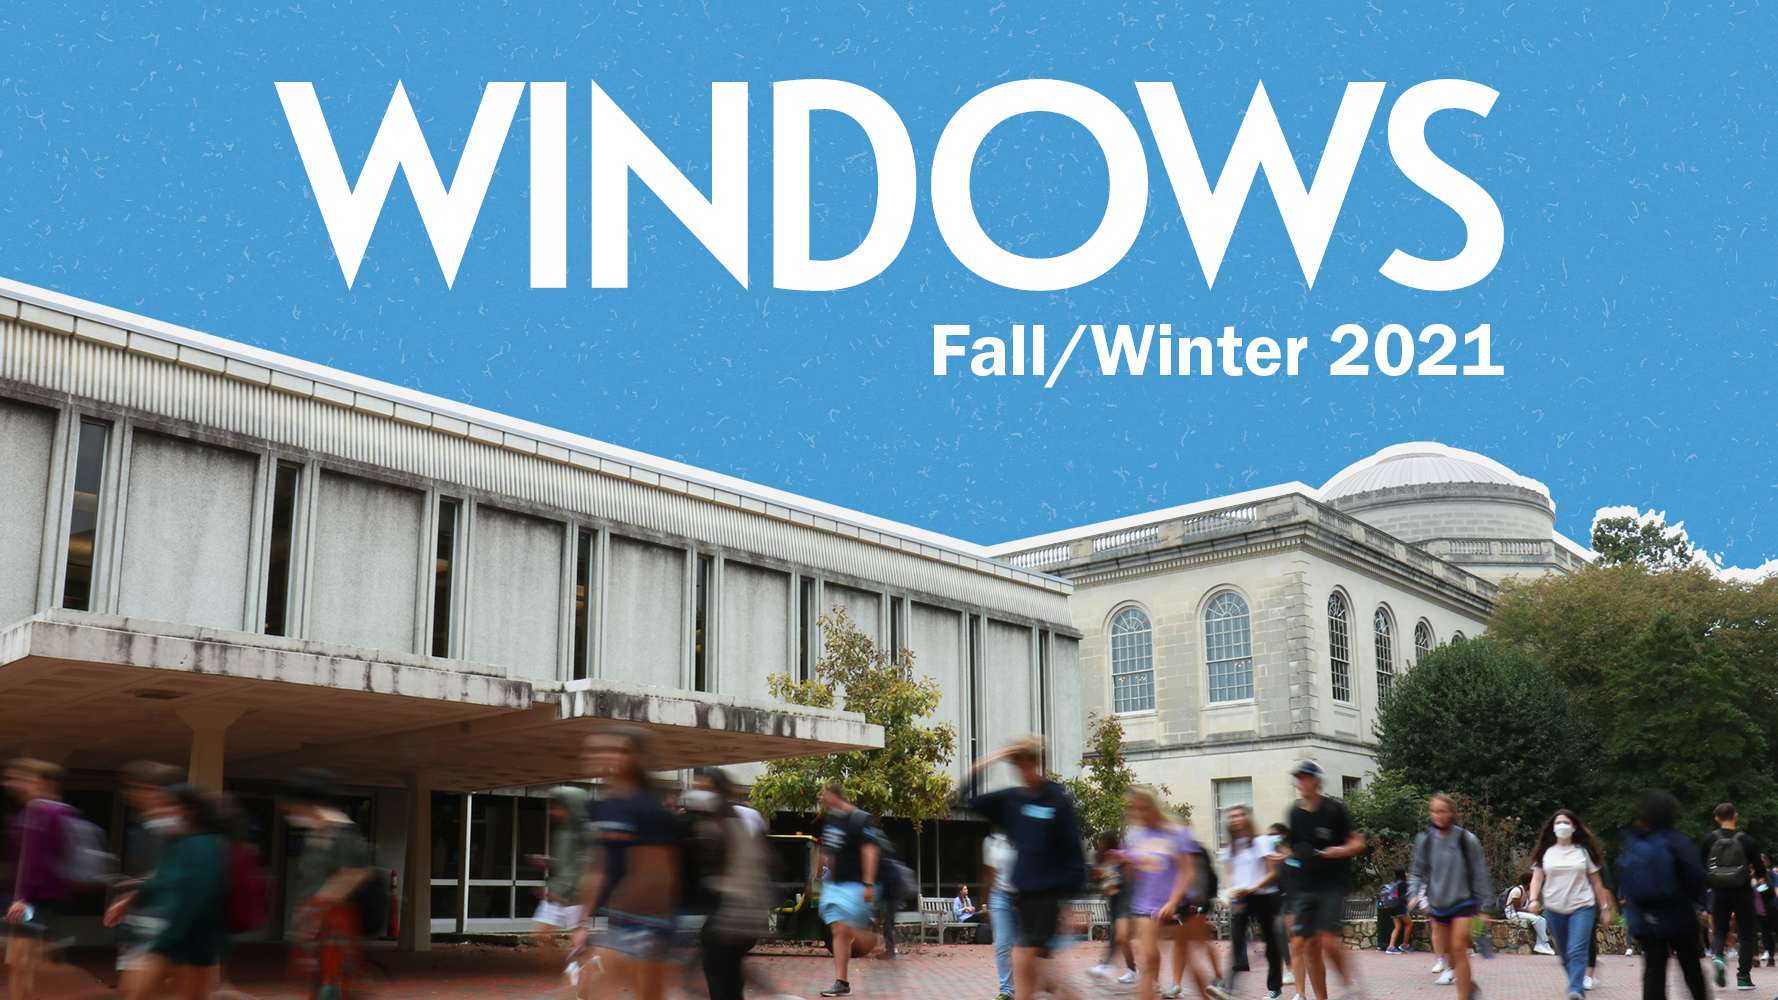 Windows Magazine Fall/Winter 2021